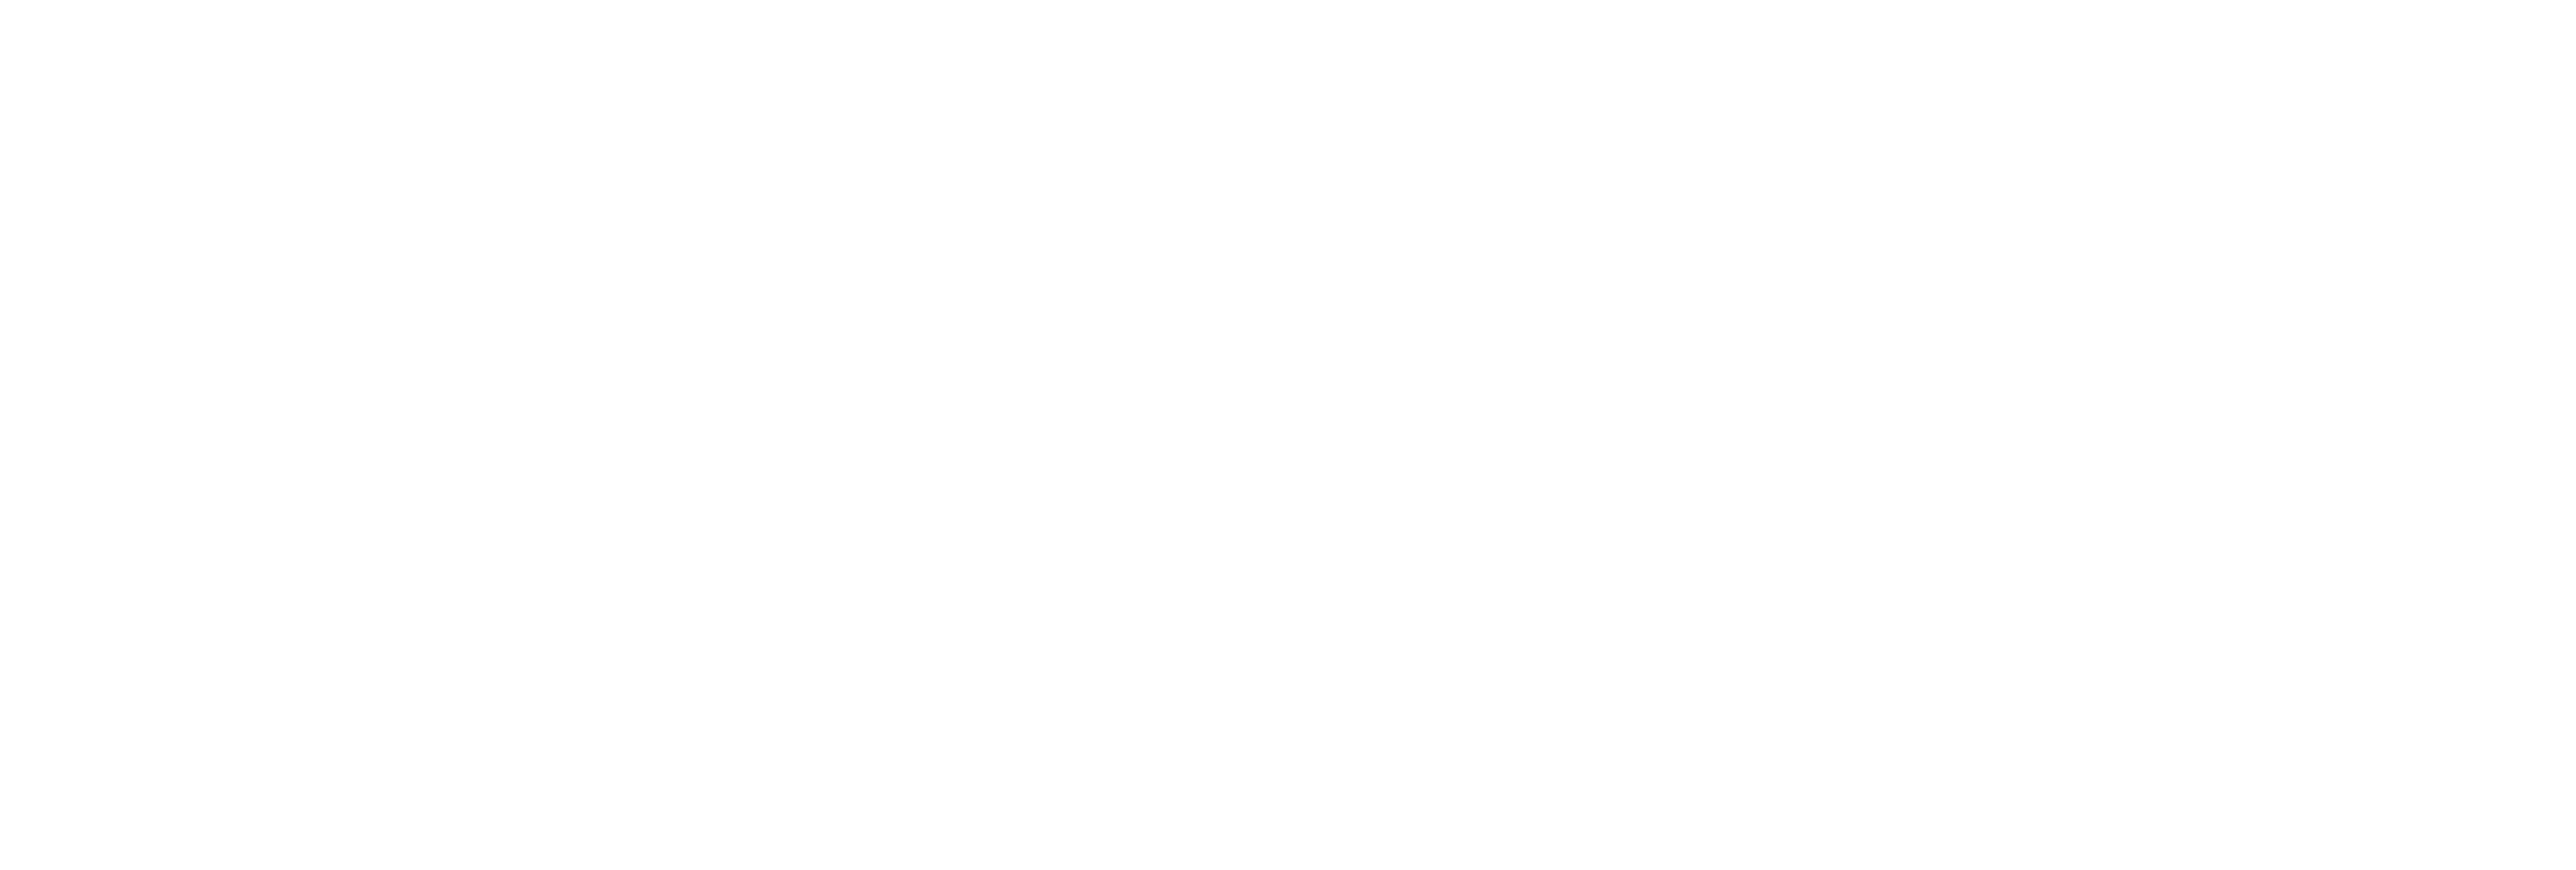 AniCura Barendrecht - Gouwe logo